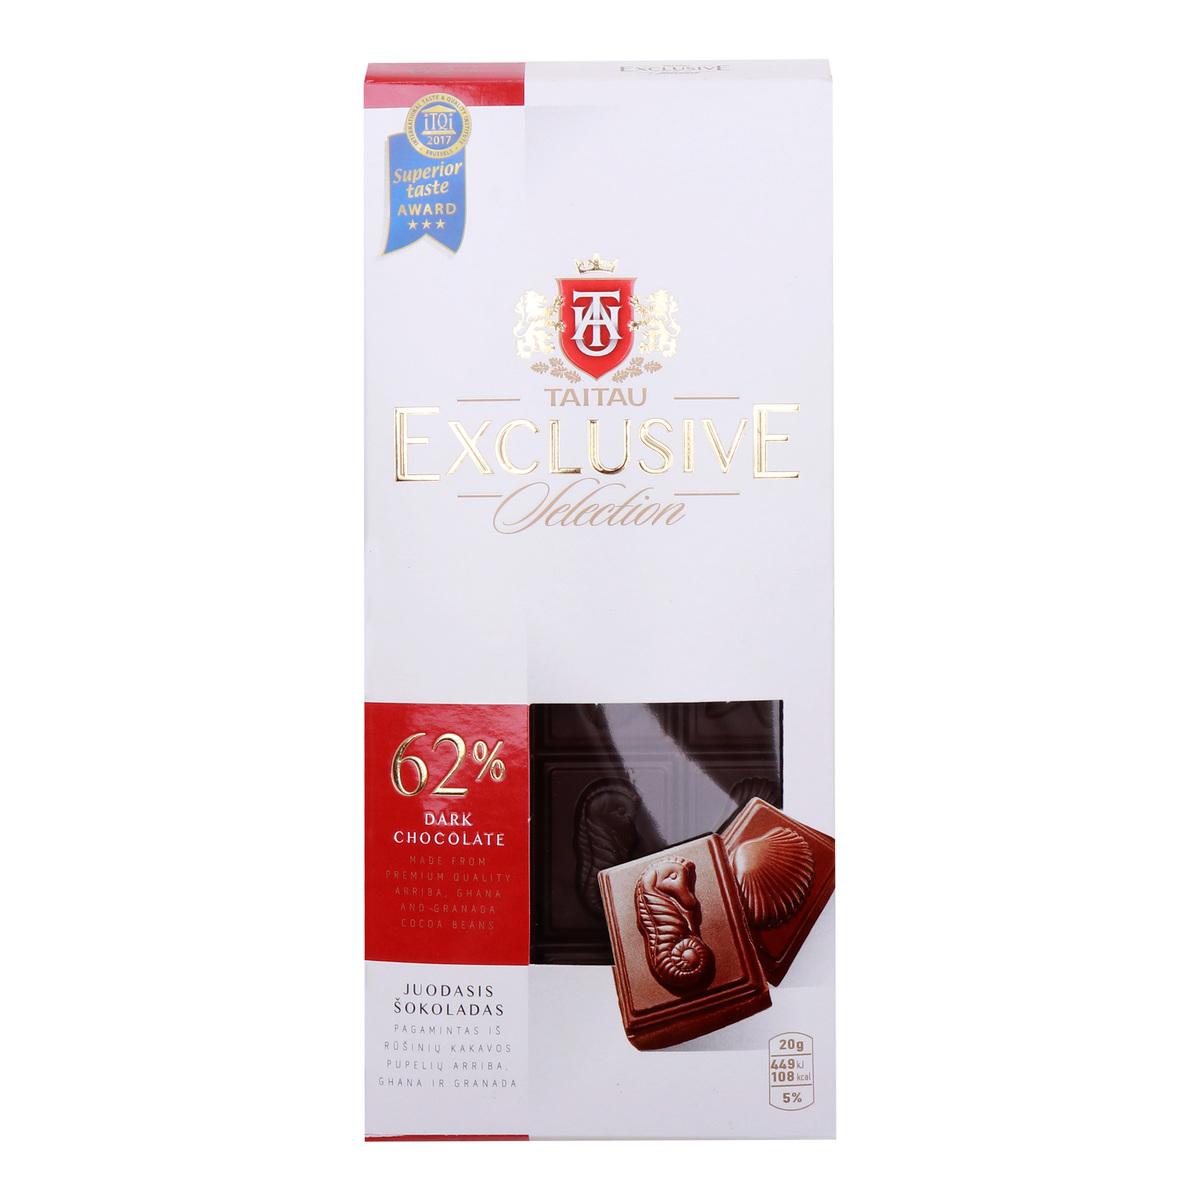 Taitau Exclusive Selection 62% Dark Chocolate, 100 g